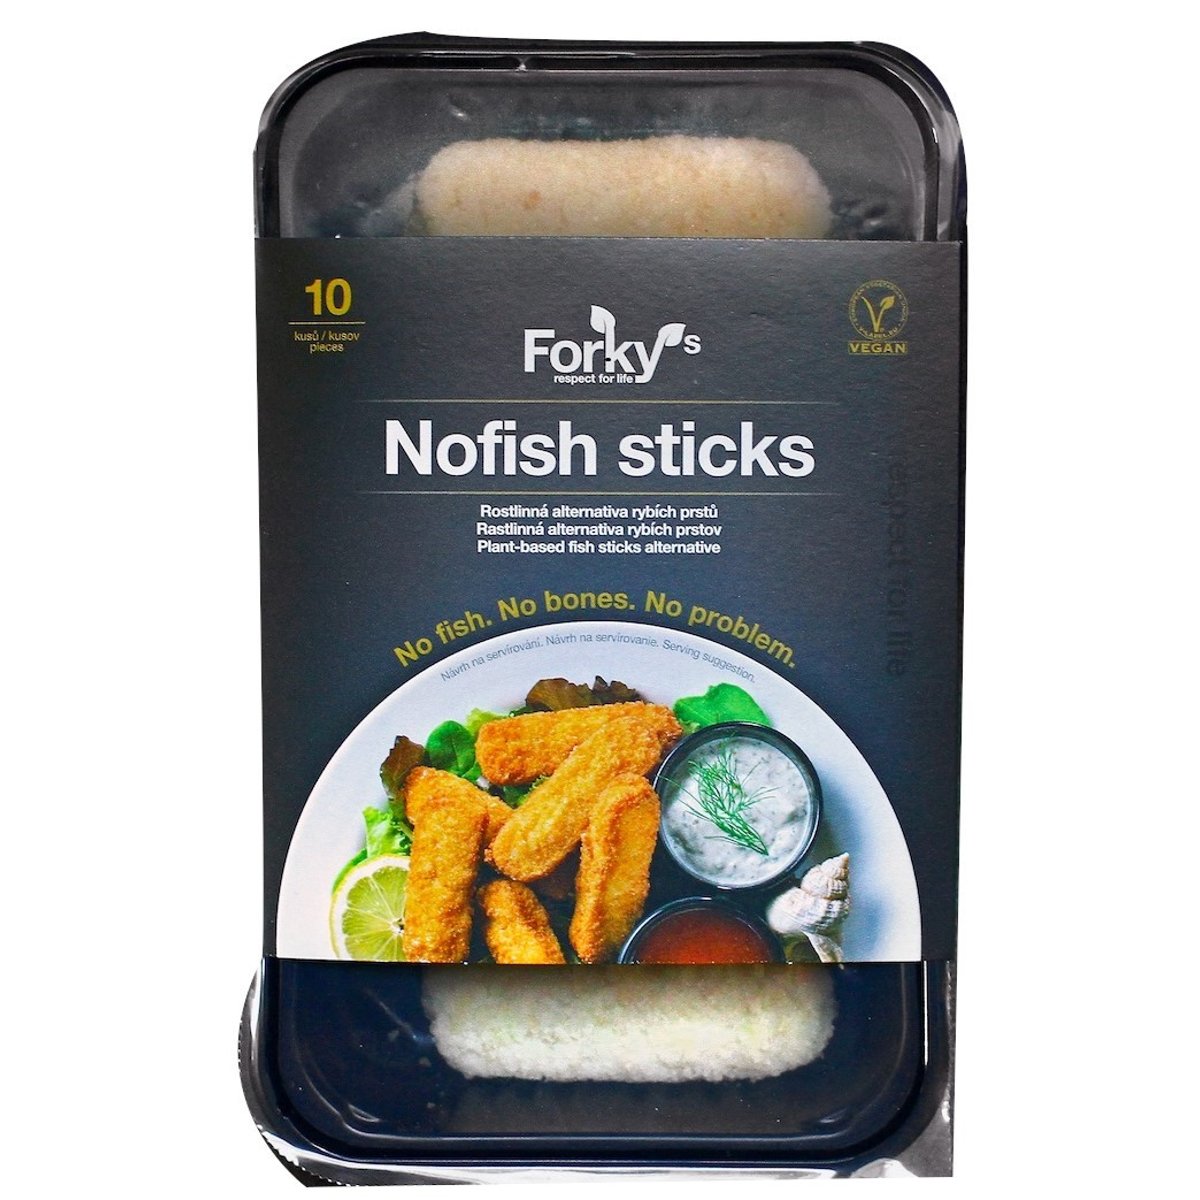 Forky's Nofish sticks